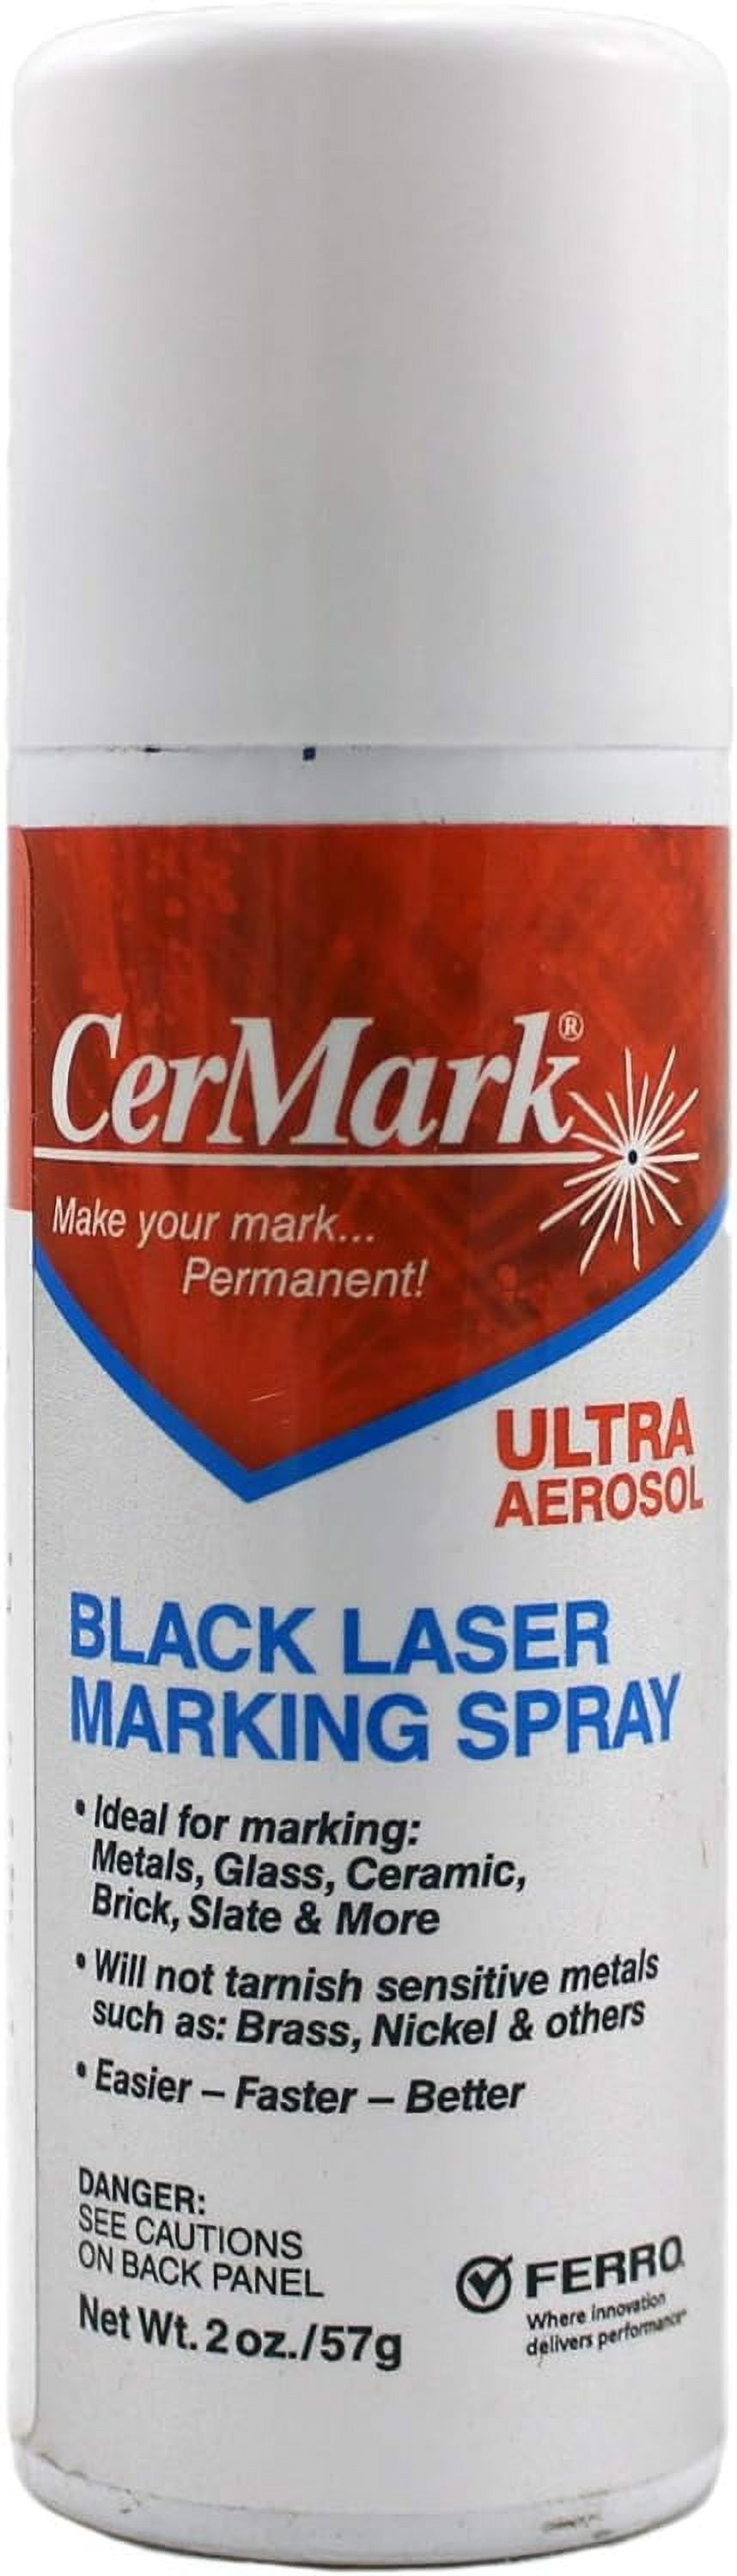 Comparing Metal Laser Marking Sprays - OMTech, CerMark, LBT, & Moly Lube 